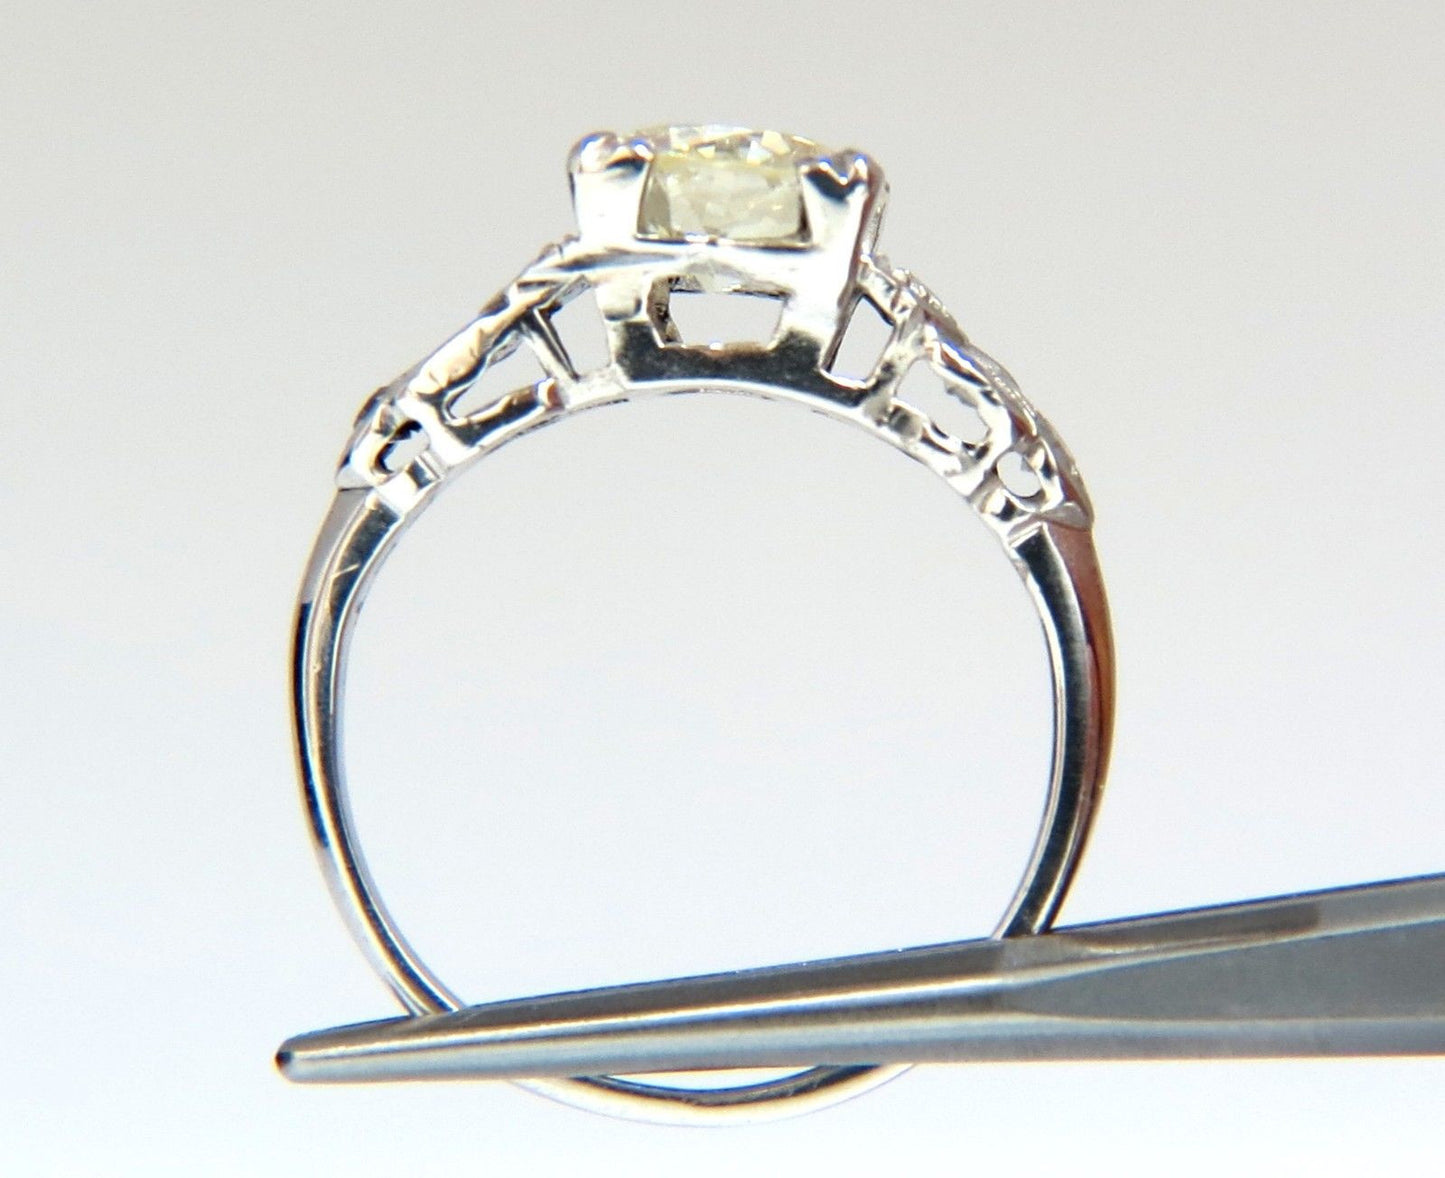 1.33c vintage class old mine cut natural diamond engagement ring platinum